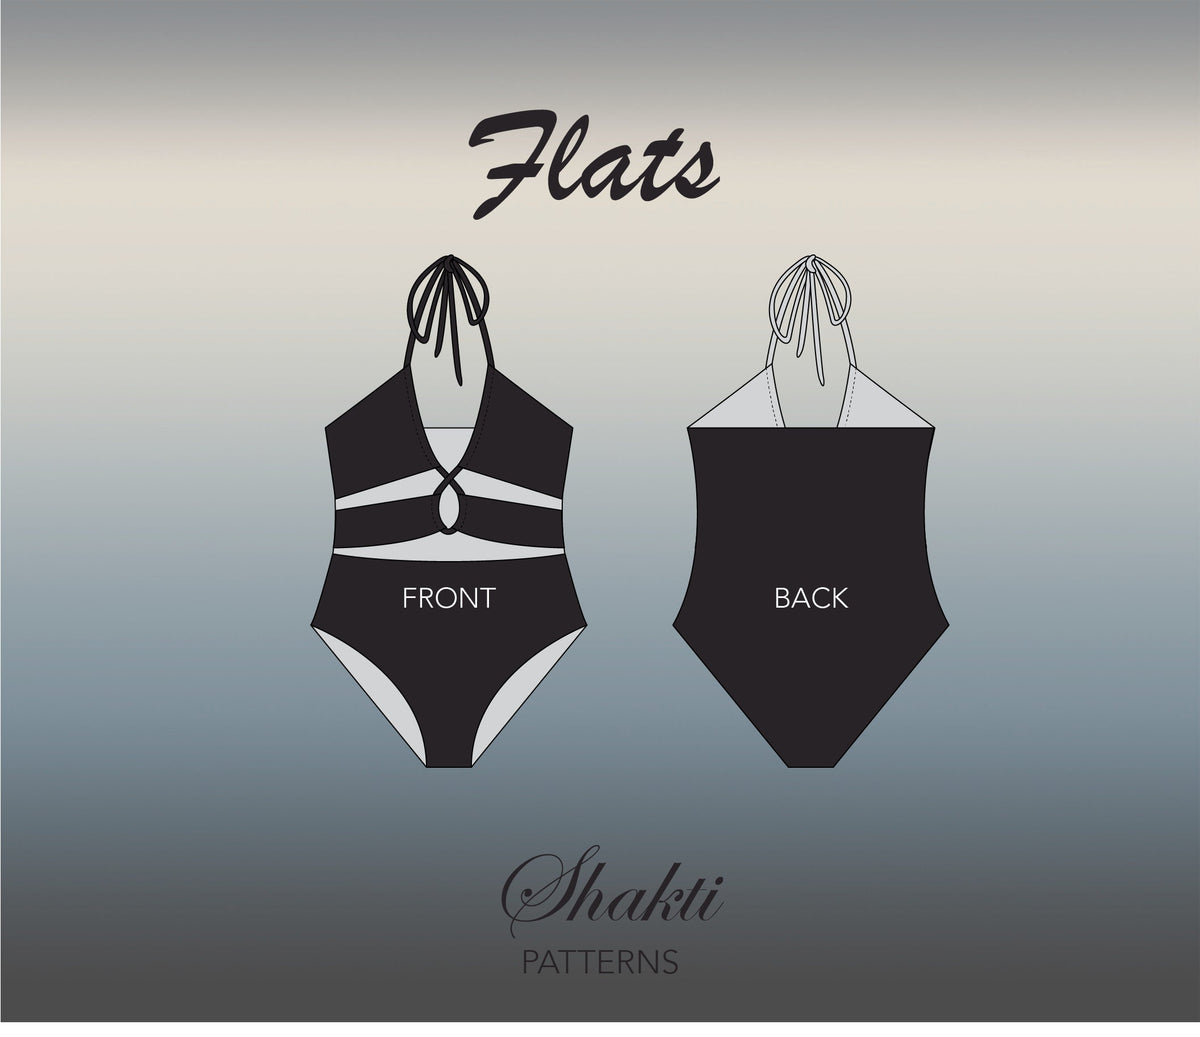 Swimwear and Activewear Fabrics and Patterns by Hantex Ltd - Issuu